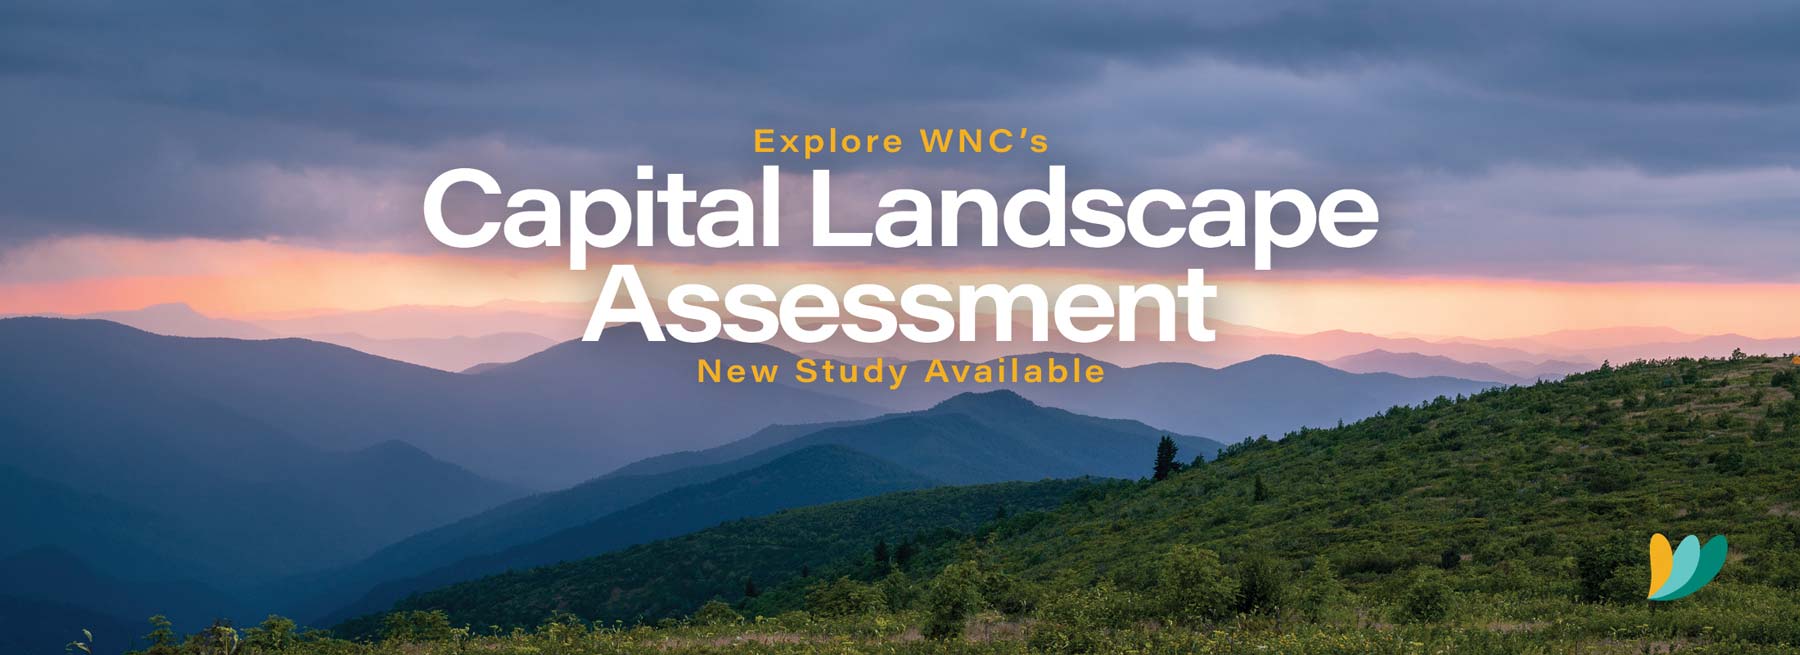 Capital Landscape Assessment banner